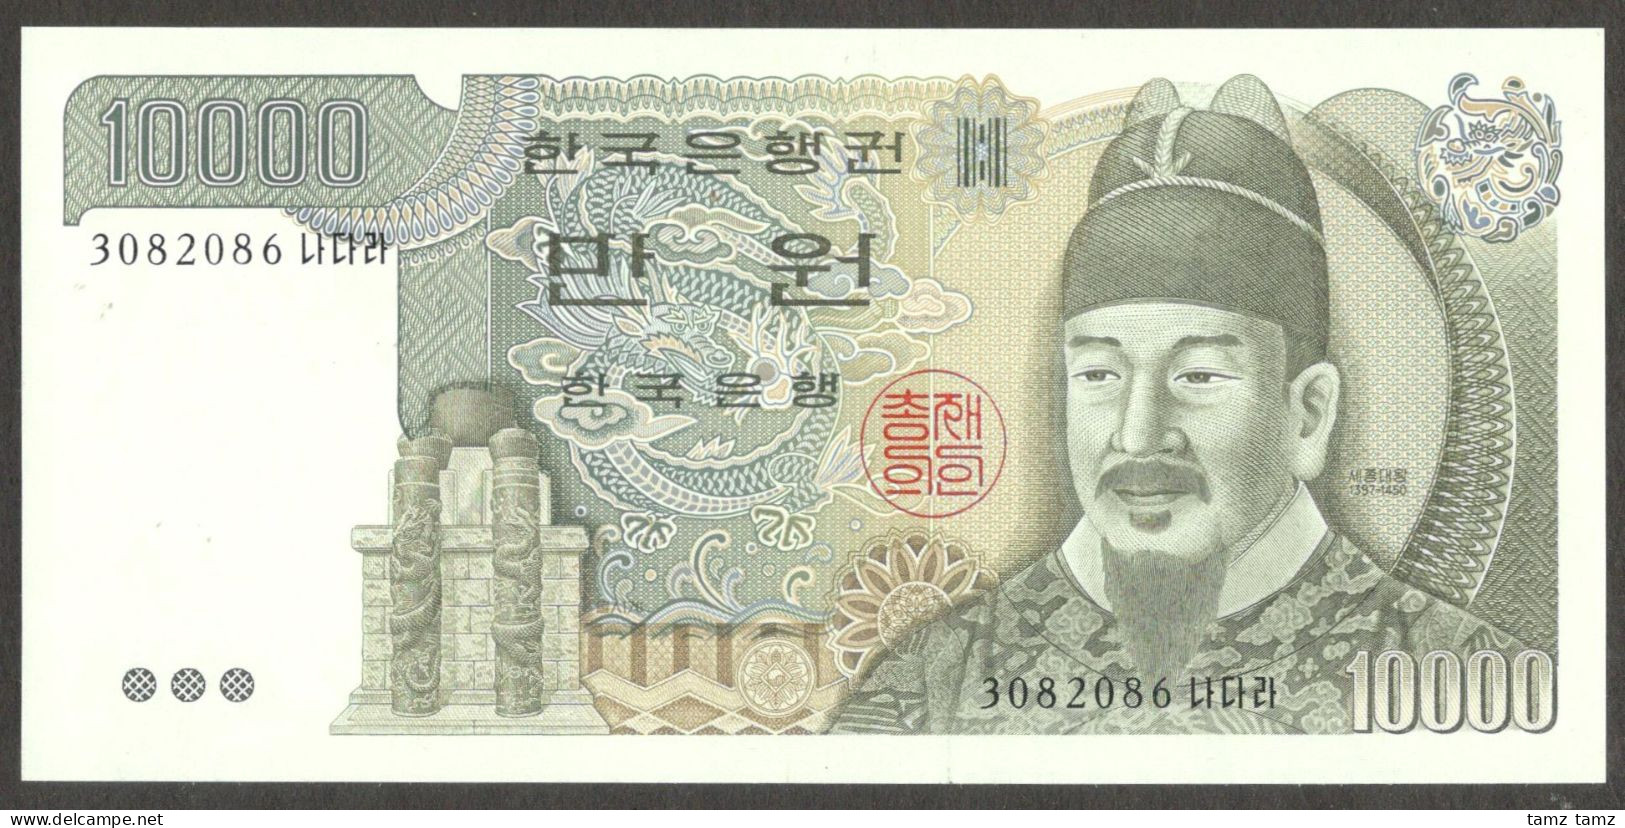 South Korea 10000 10,000 Won King Sejong Without Security Thread 1983 UNC - Korea, South